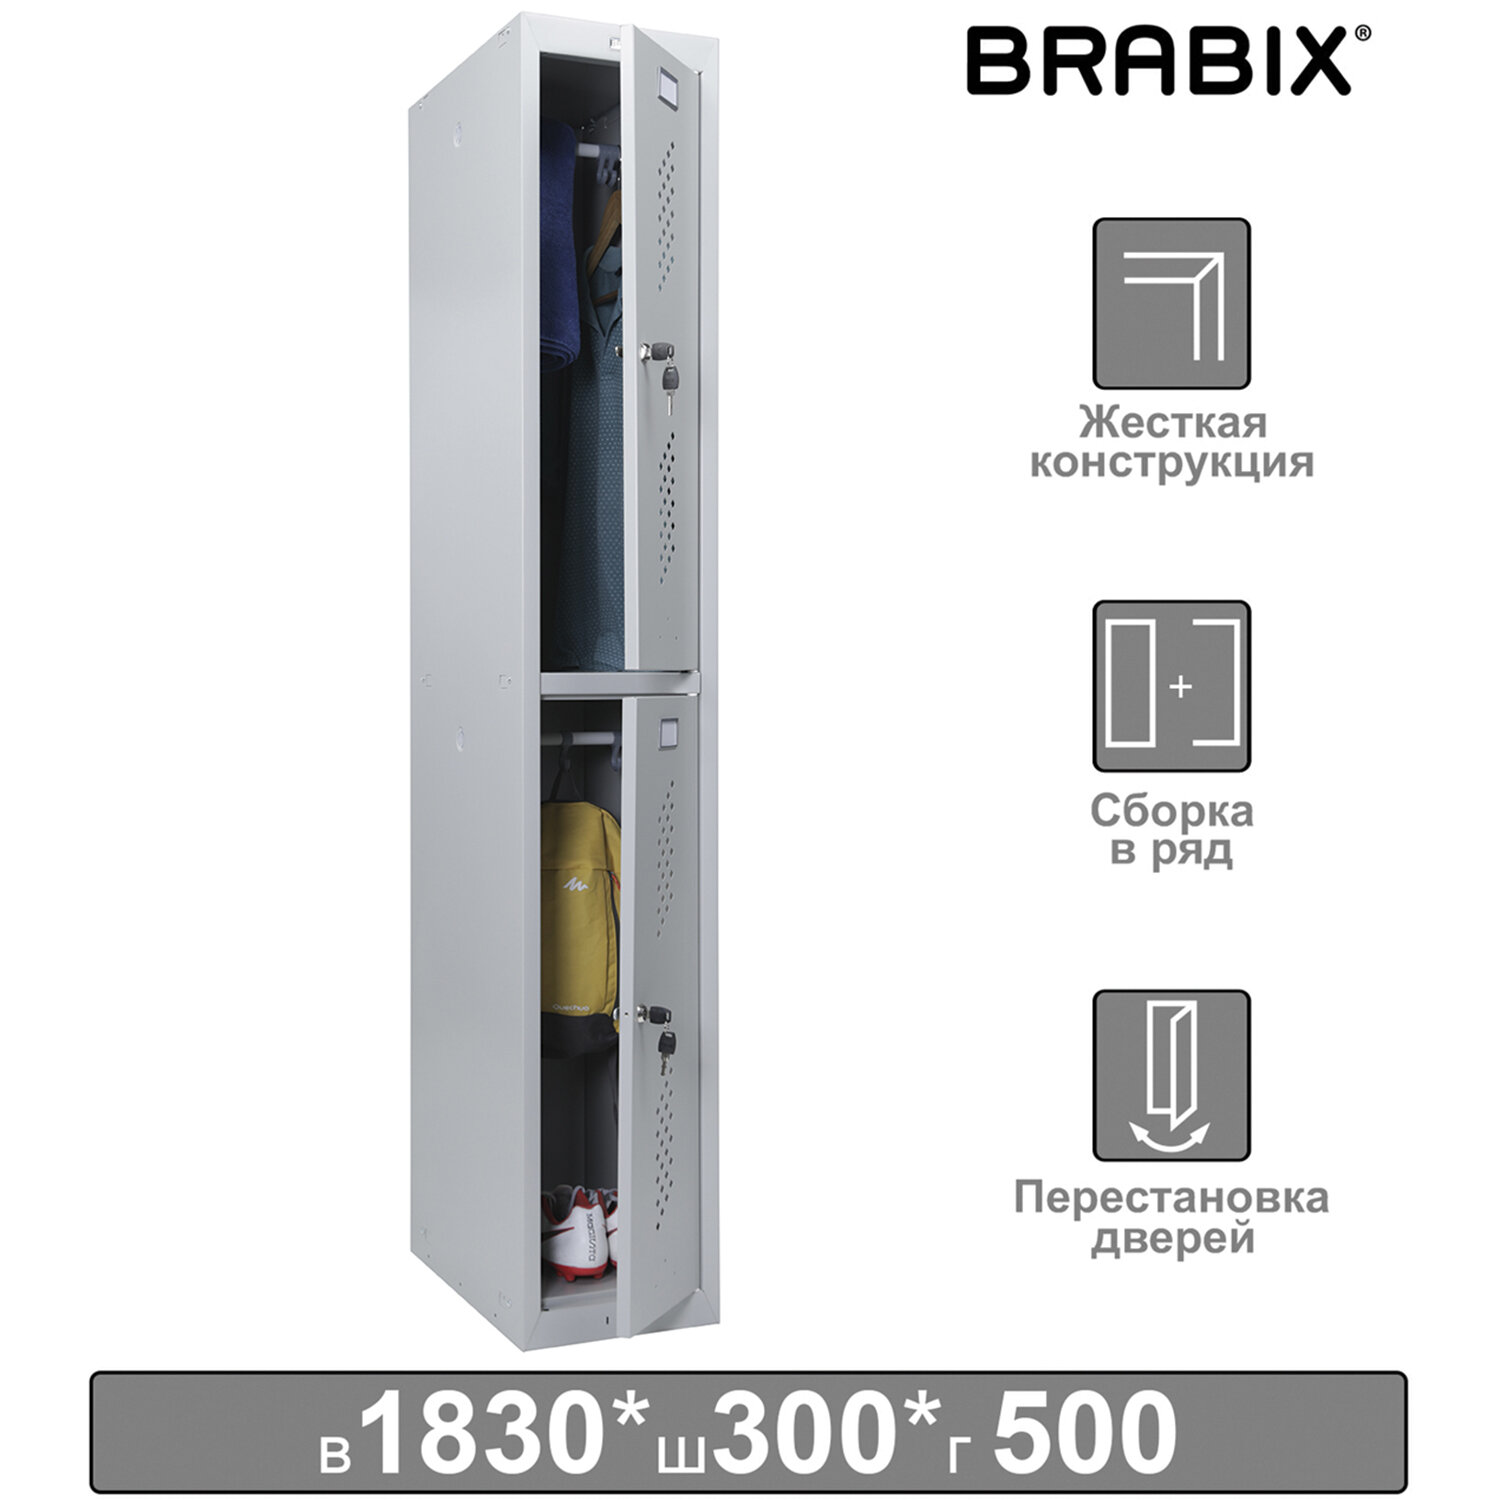 Brabix Шкаф металлический для одежды BRABIX LK 12-30, УСИЛЕННЫЙ, 2 секции, 1830х300х500 мм, 18 кг, 291133, S230BR421102